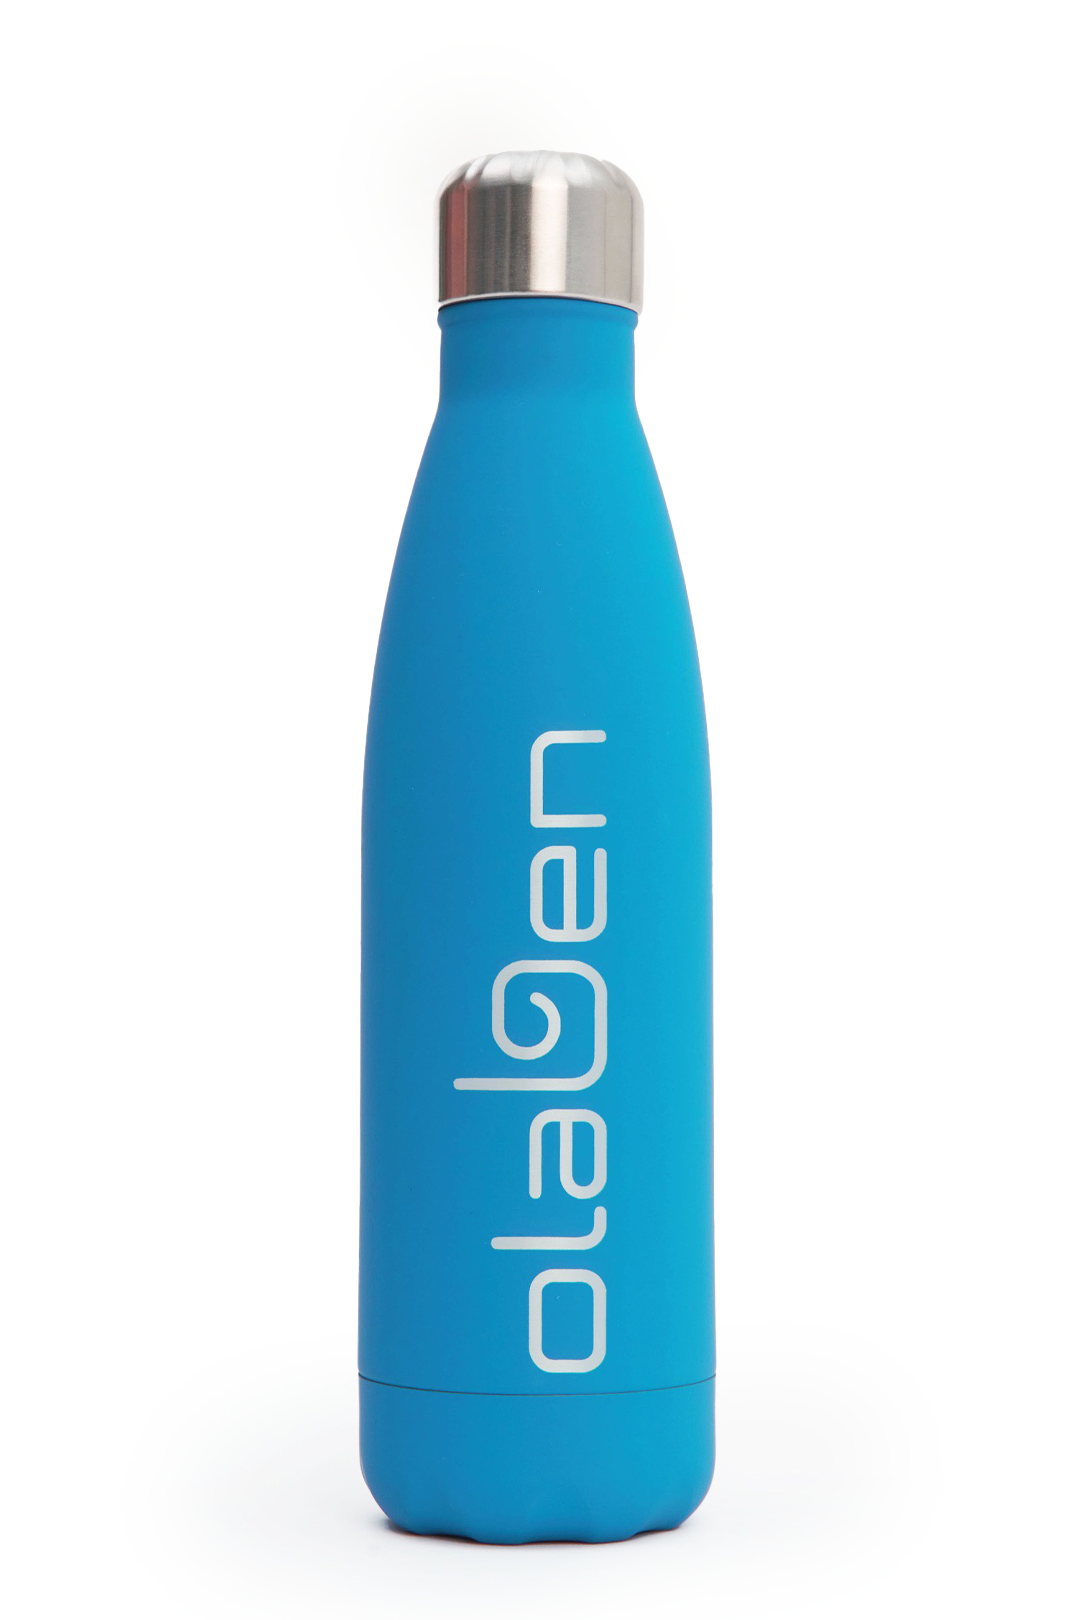 Light blue water bottle equipment for outdoor use